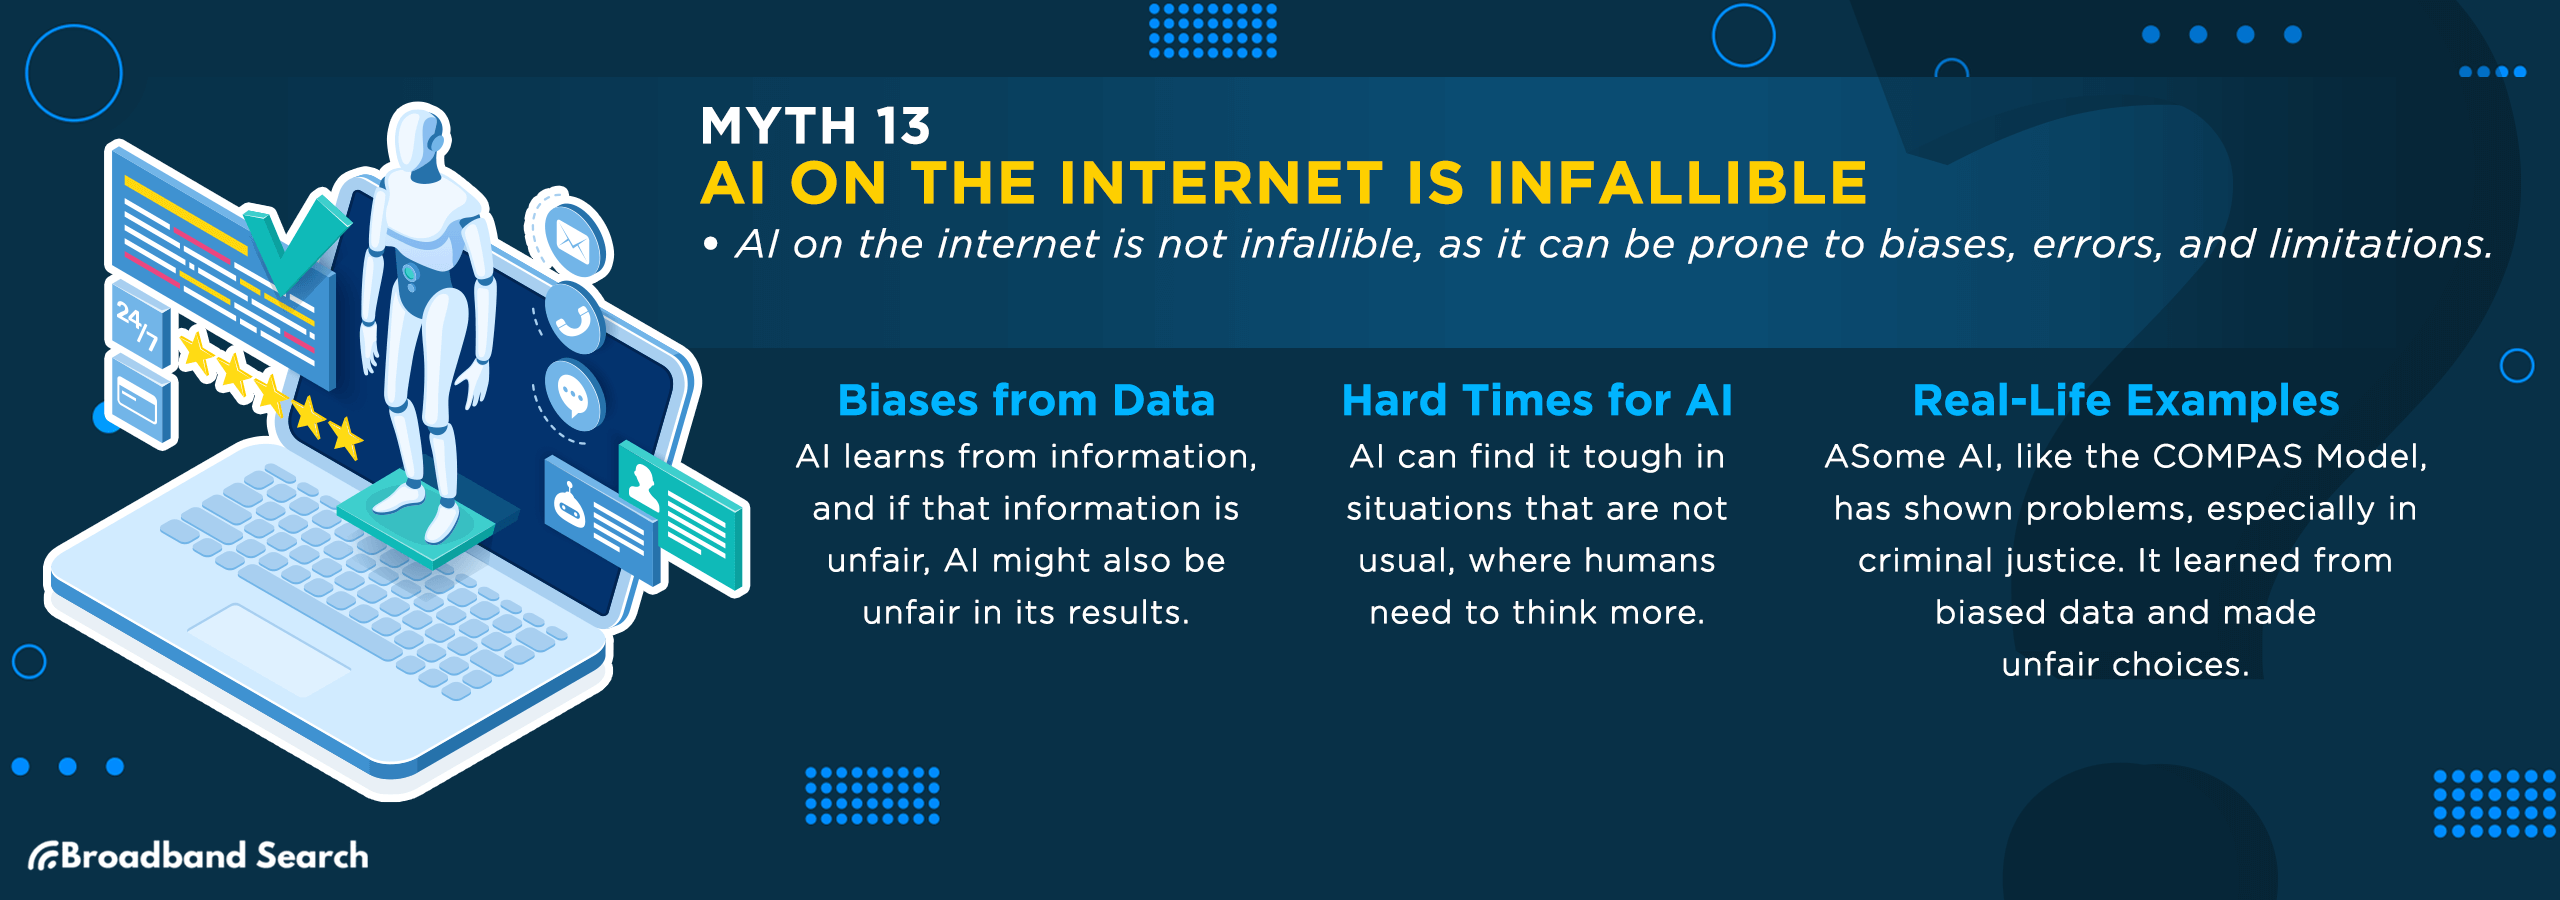 13th internet myth, AI onthe internet is infallible